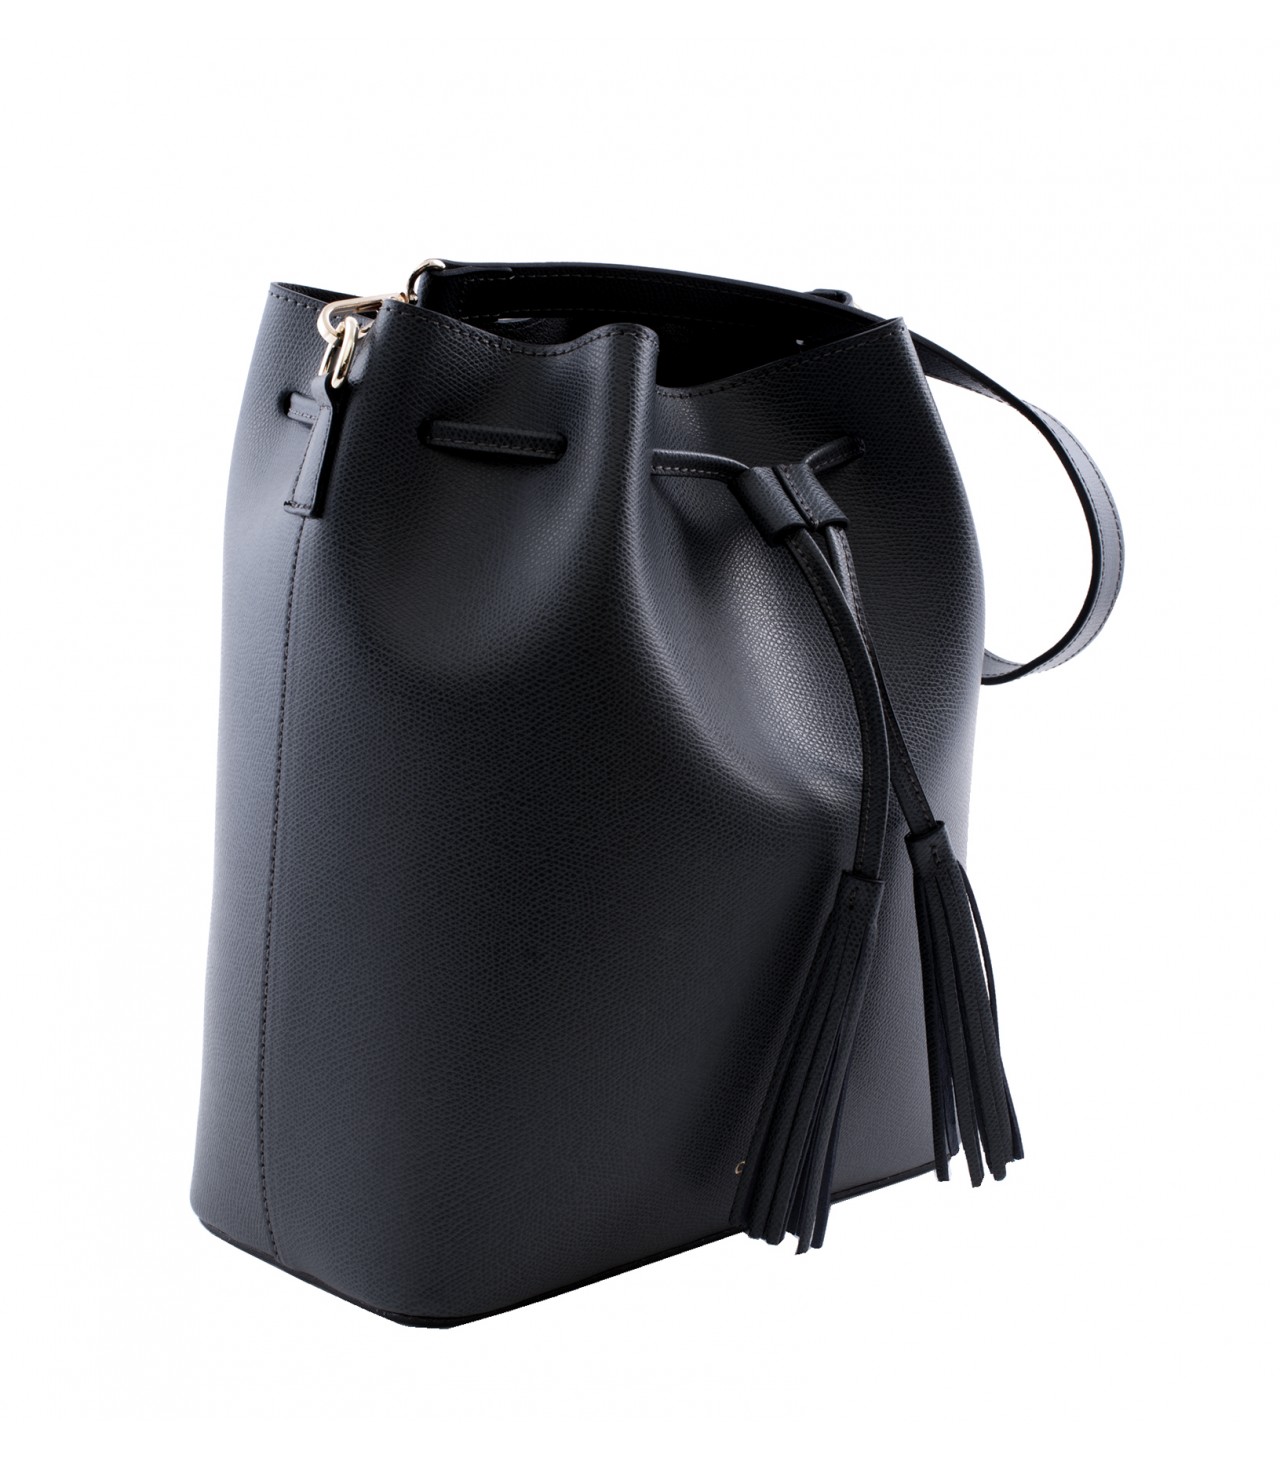 black leather bucket handbag